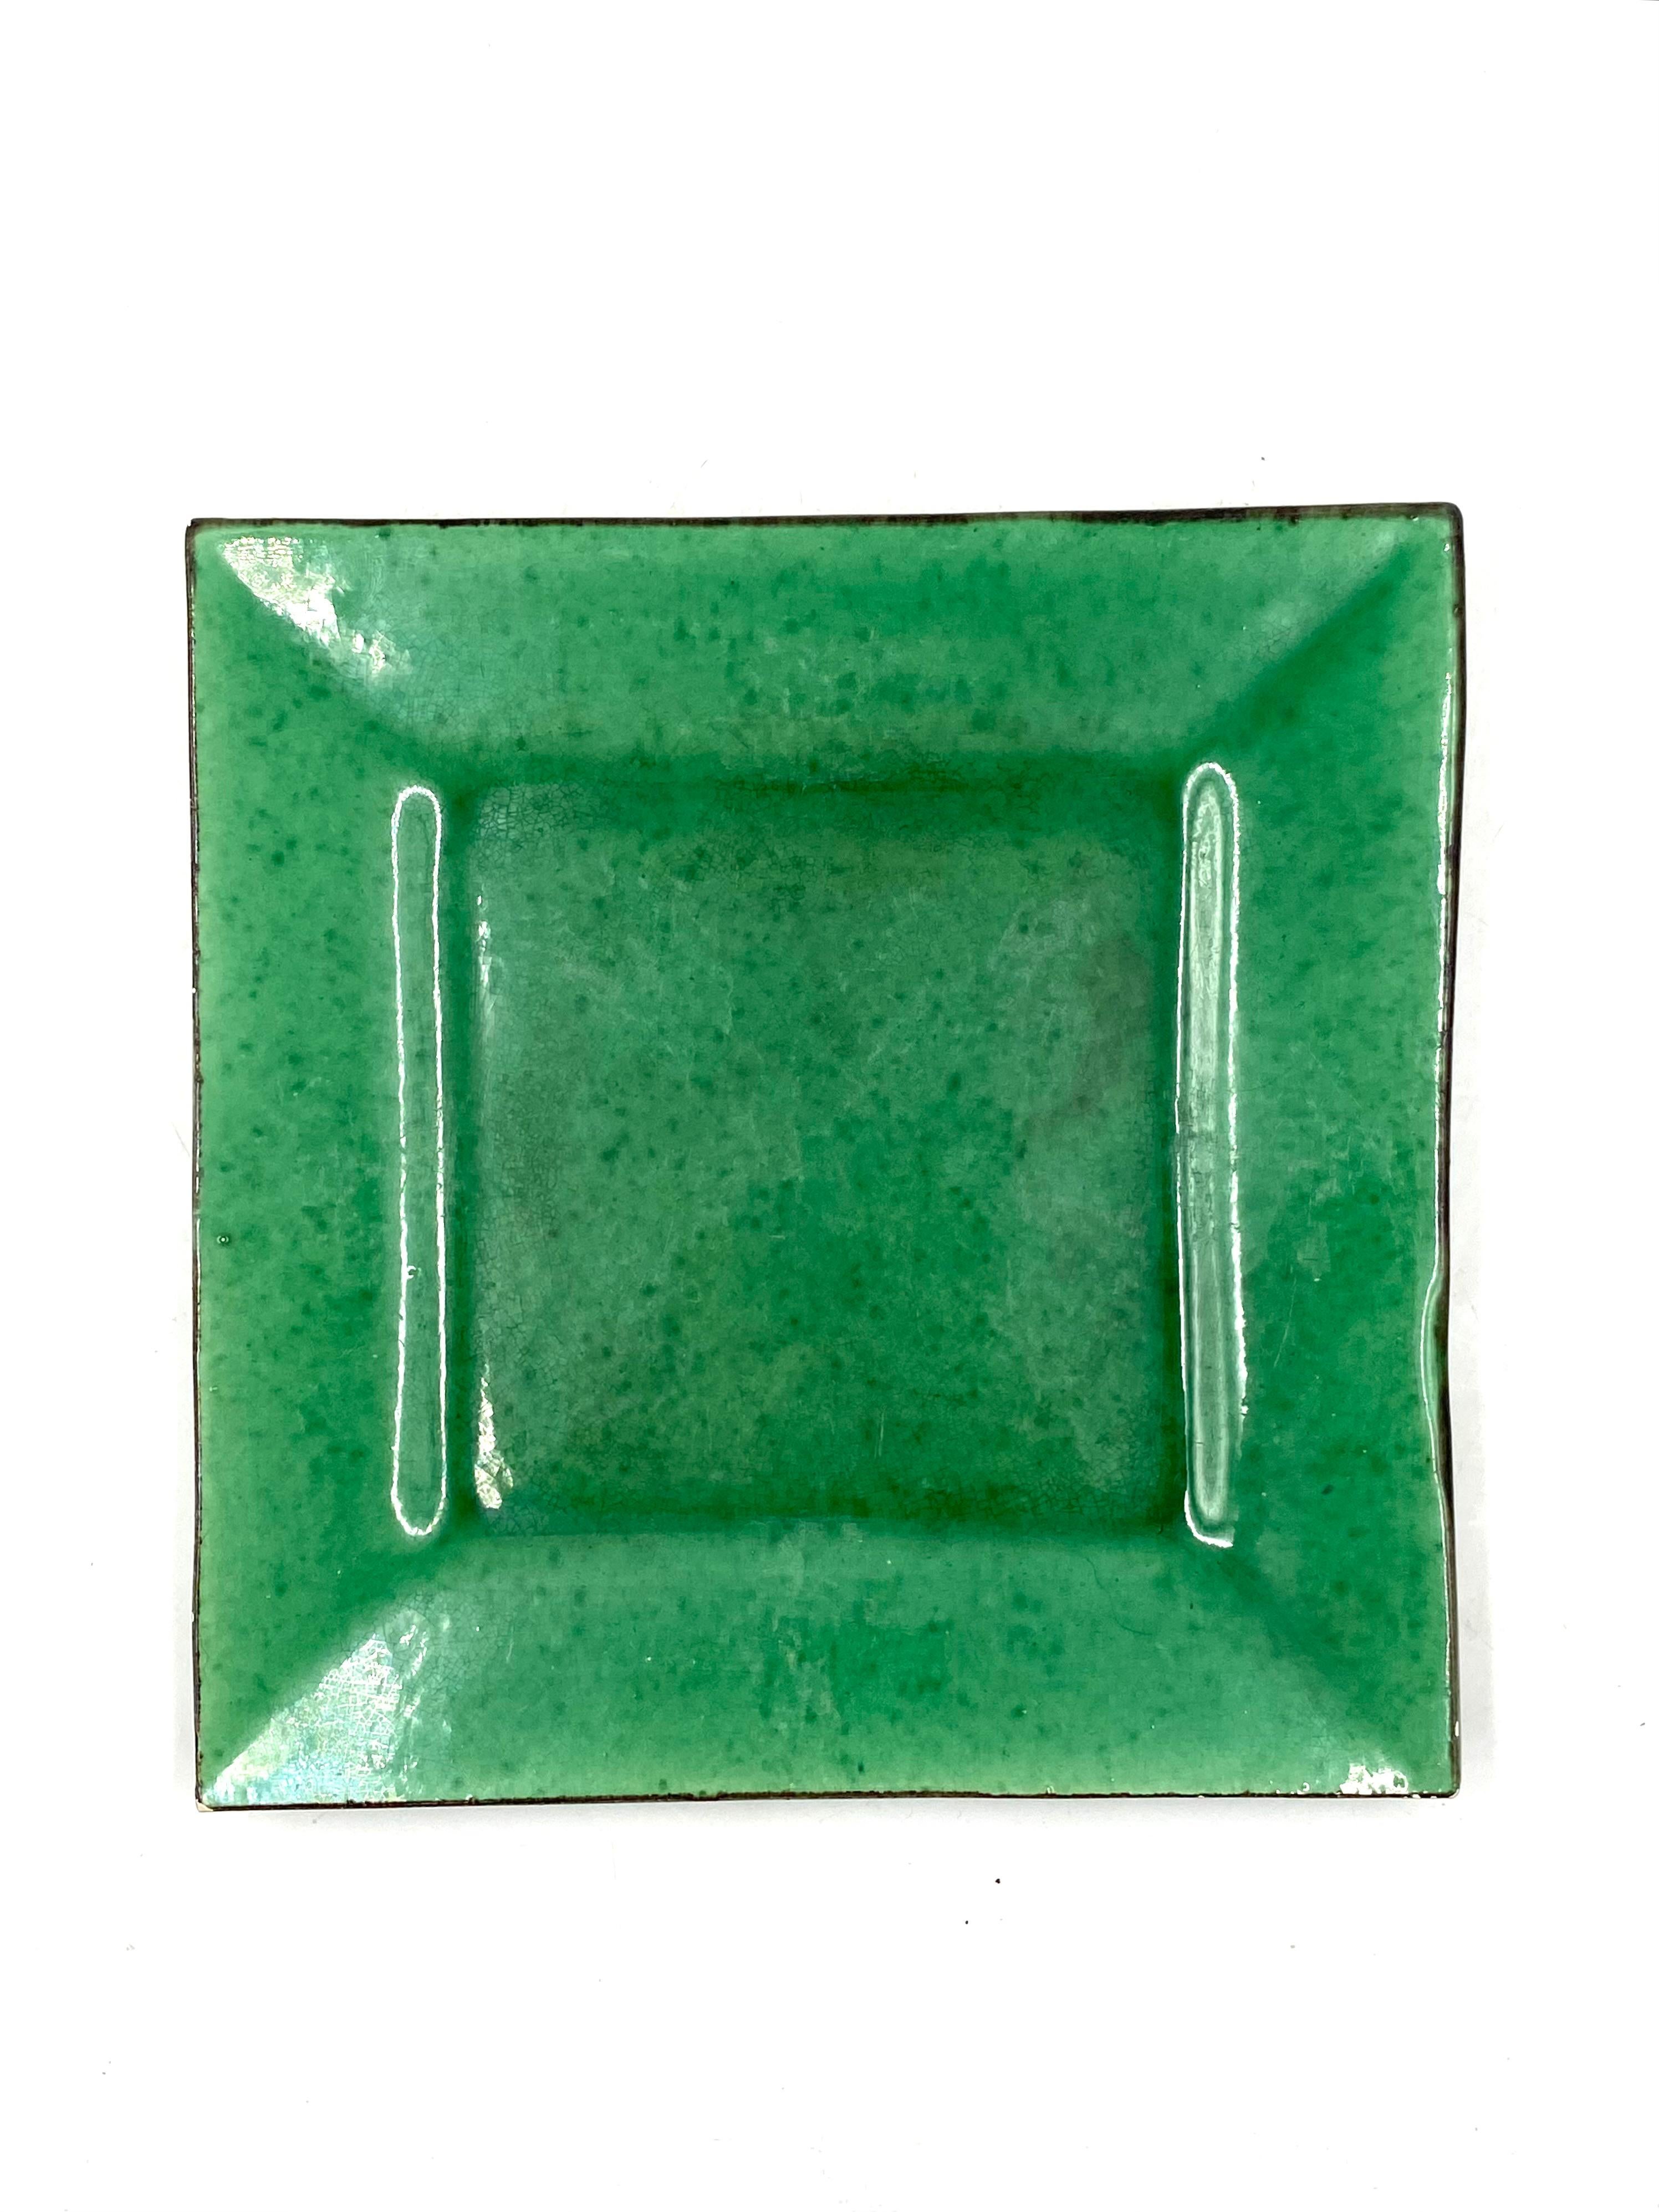 Green Fire-Glazed ceramic vide poche, France, ca. 1960 For Sale 5